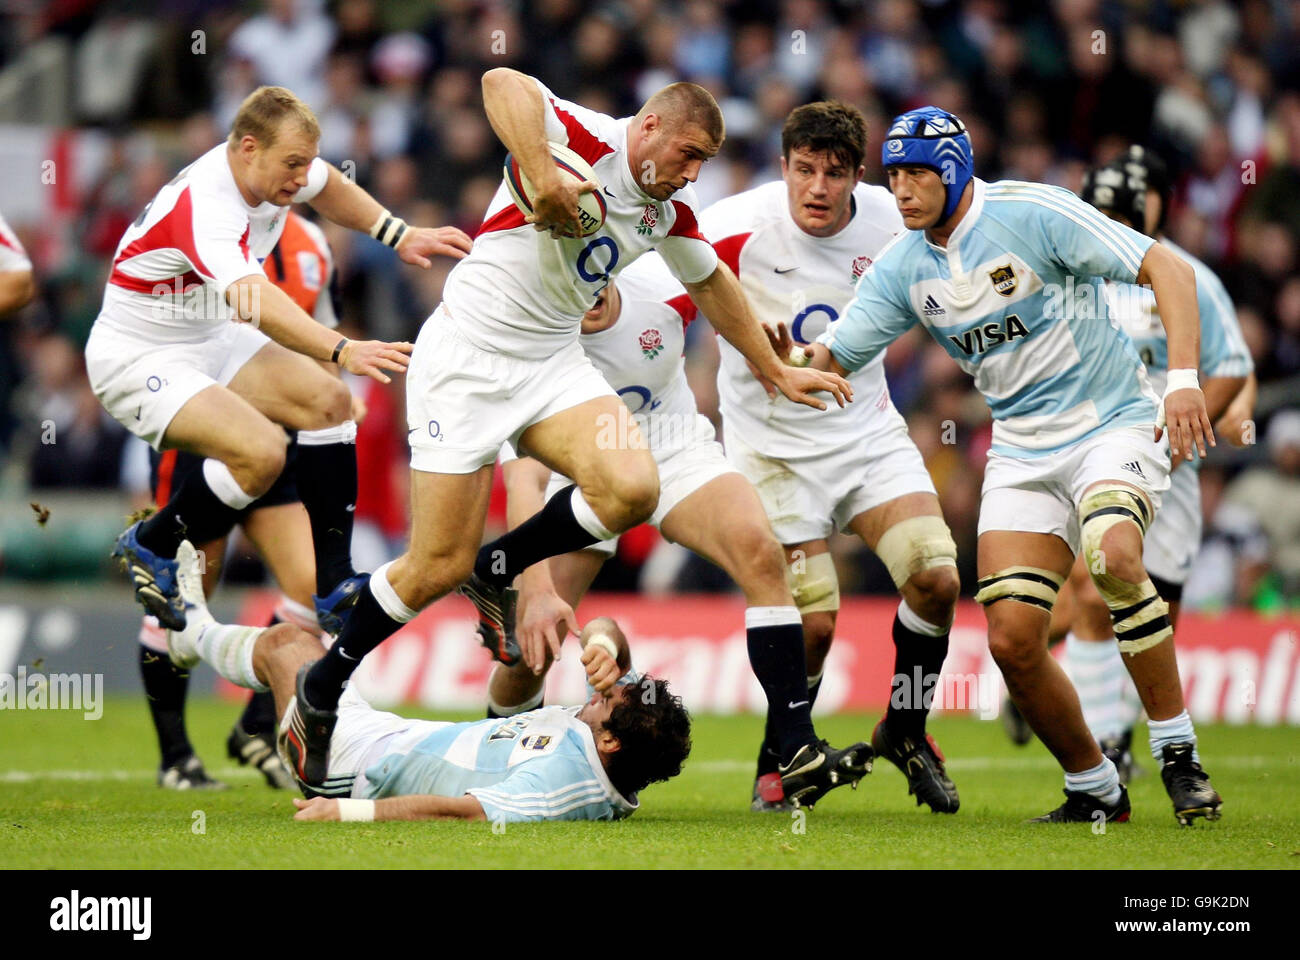 Rugby Union - International - England v Argentina - Twickenham Stock Photo 